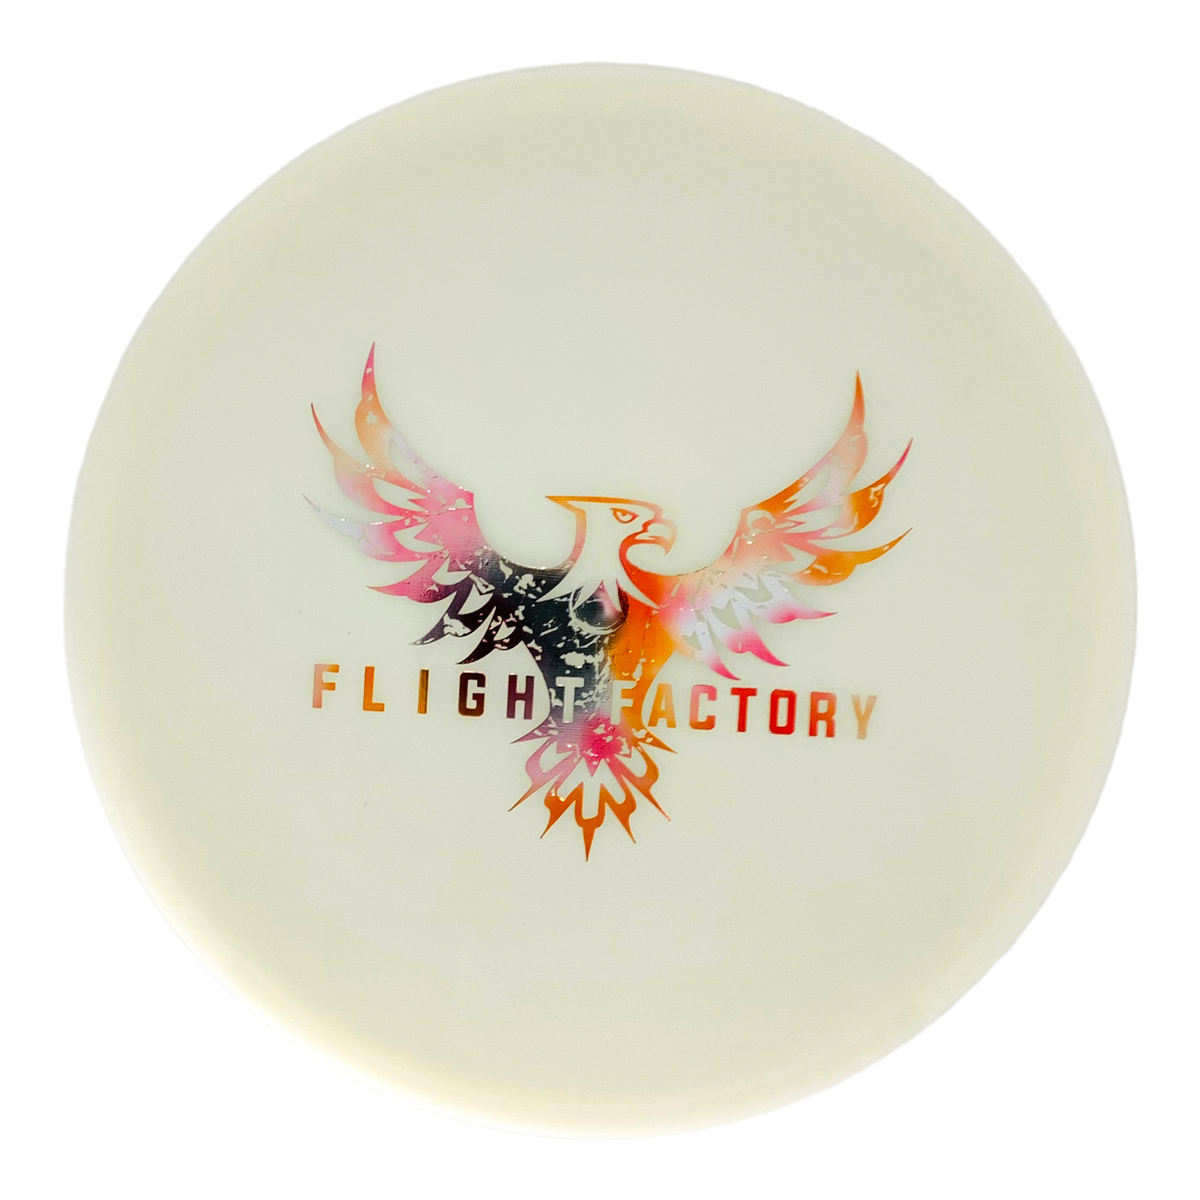 Flight Factory Eagle Discmania Neo Mutant